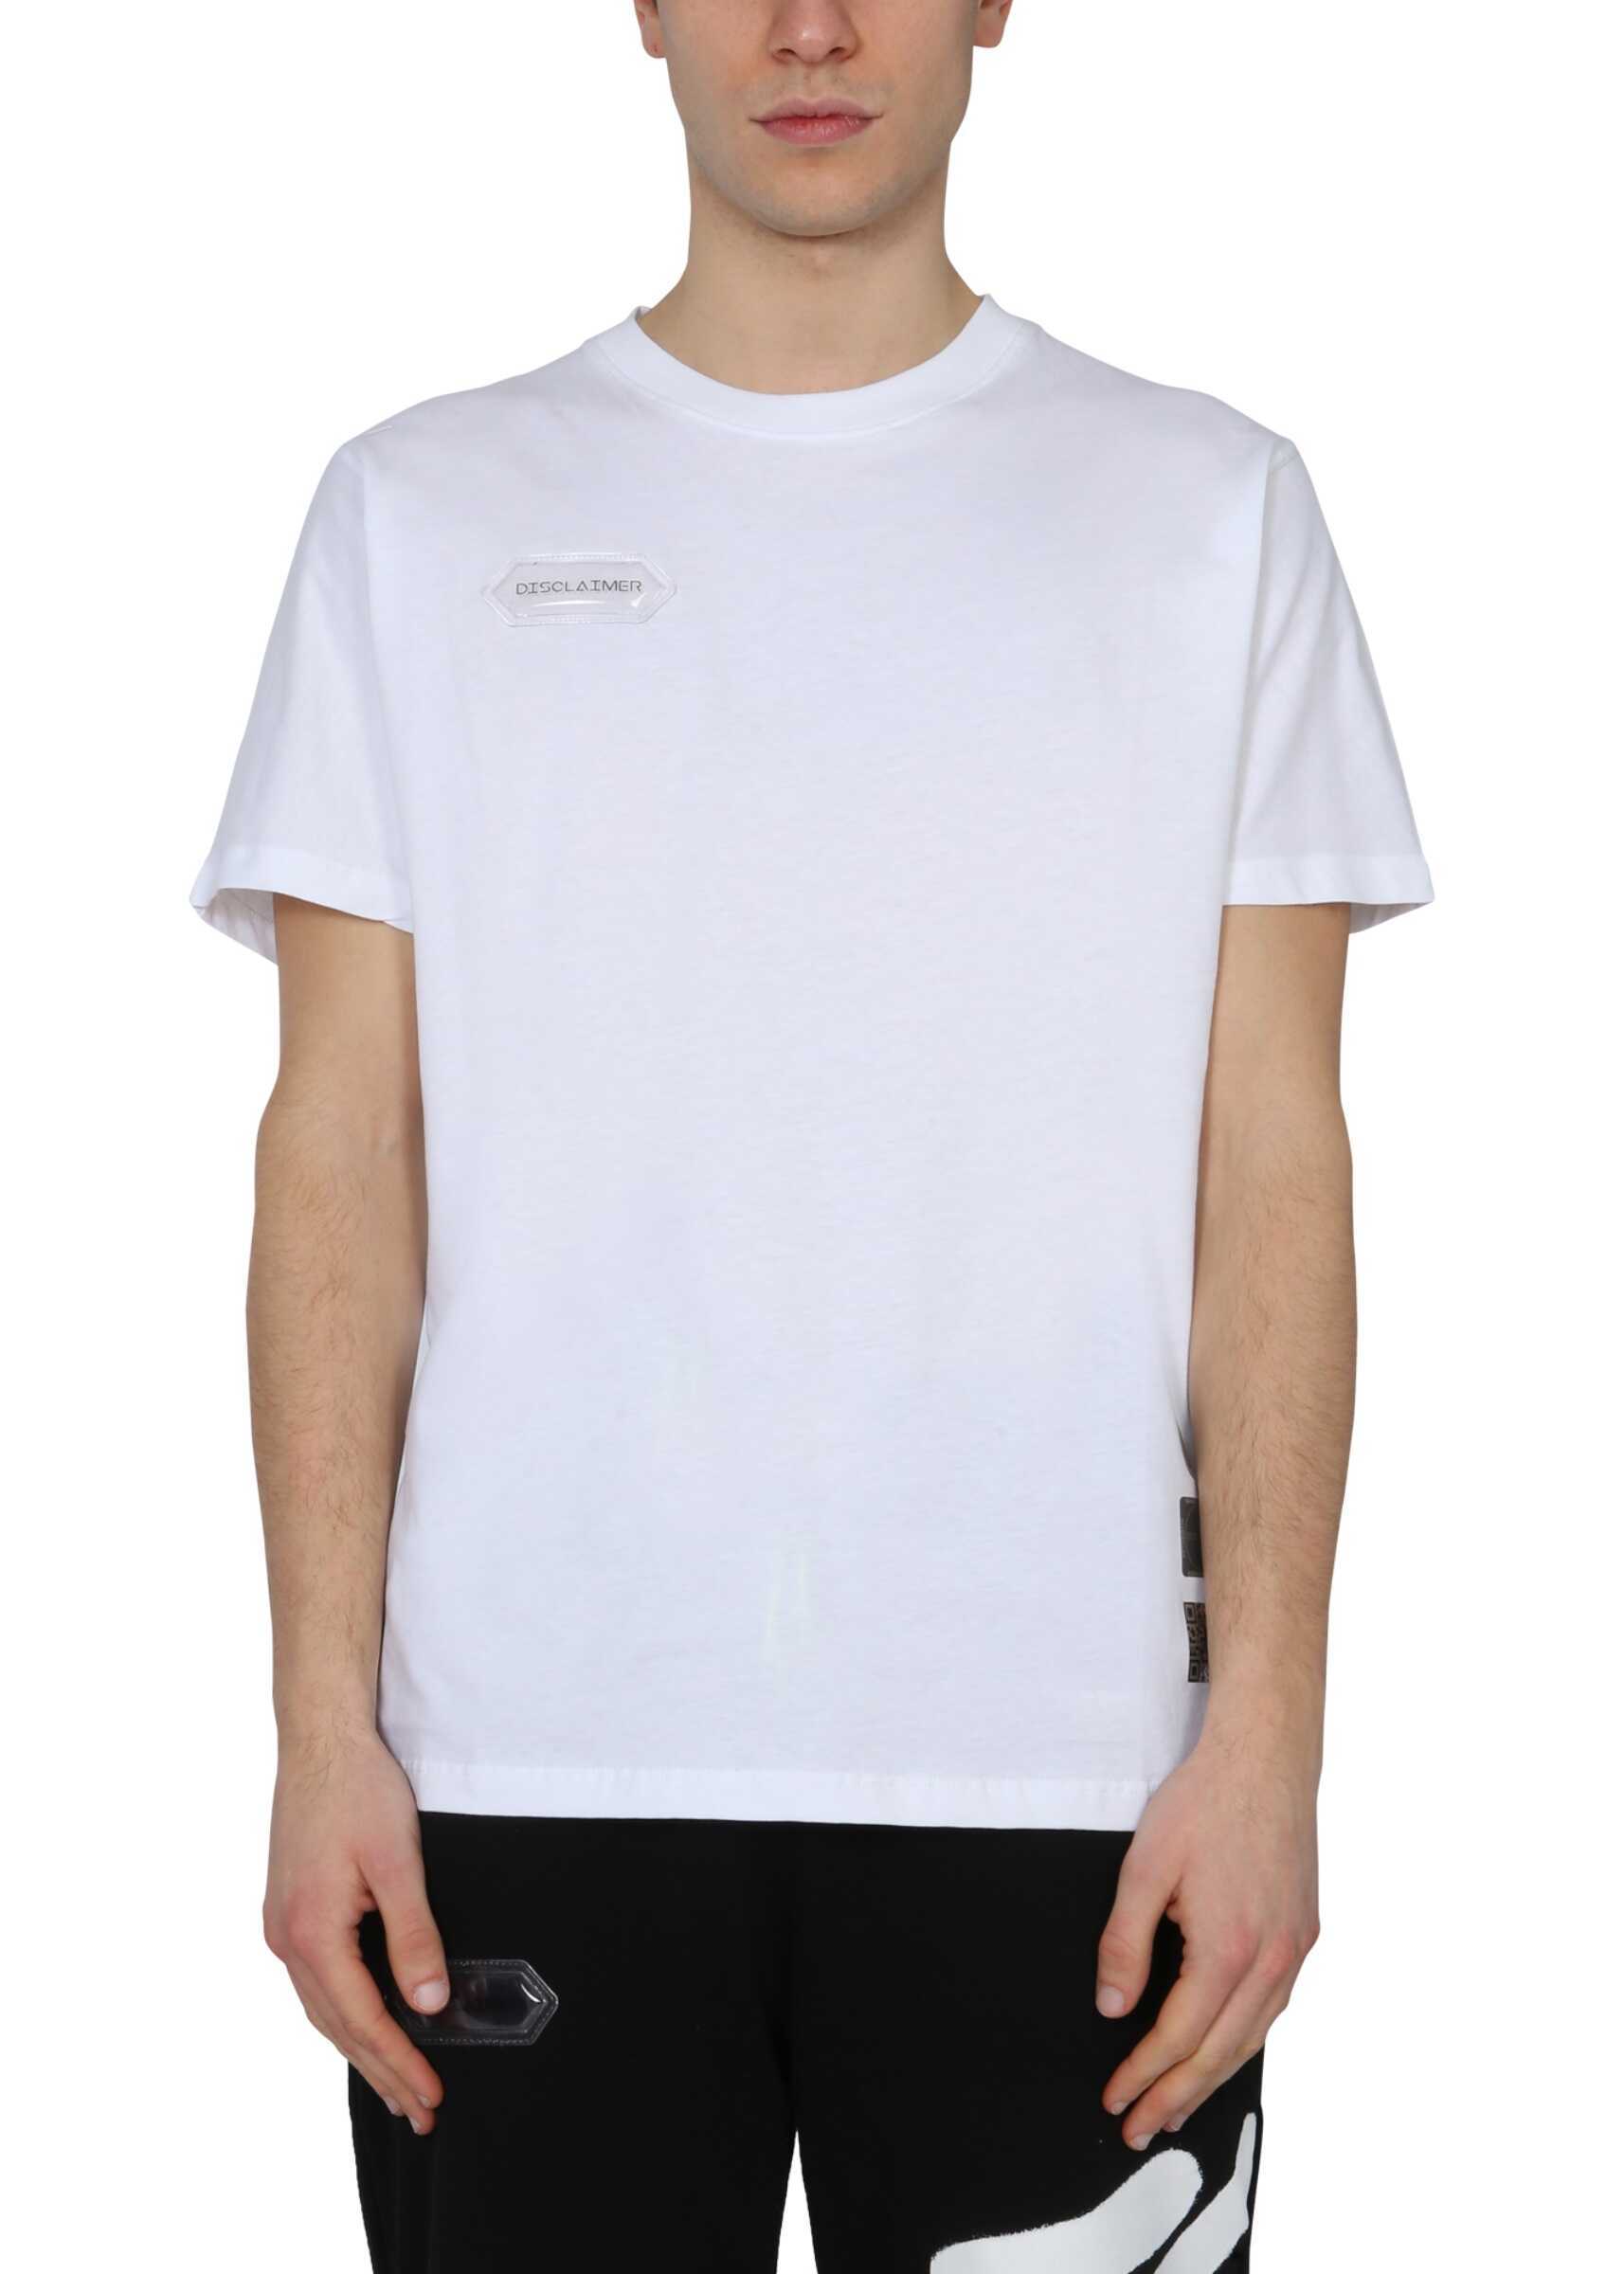 Disclaimer T-Shirt With Screen Print 21EDS50610_BIANCO/NERO WHITE